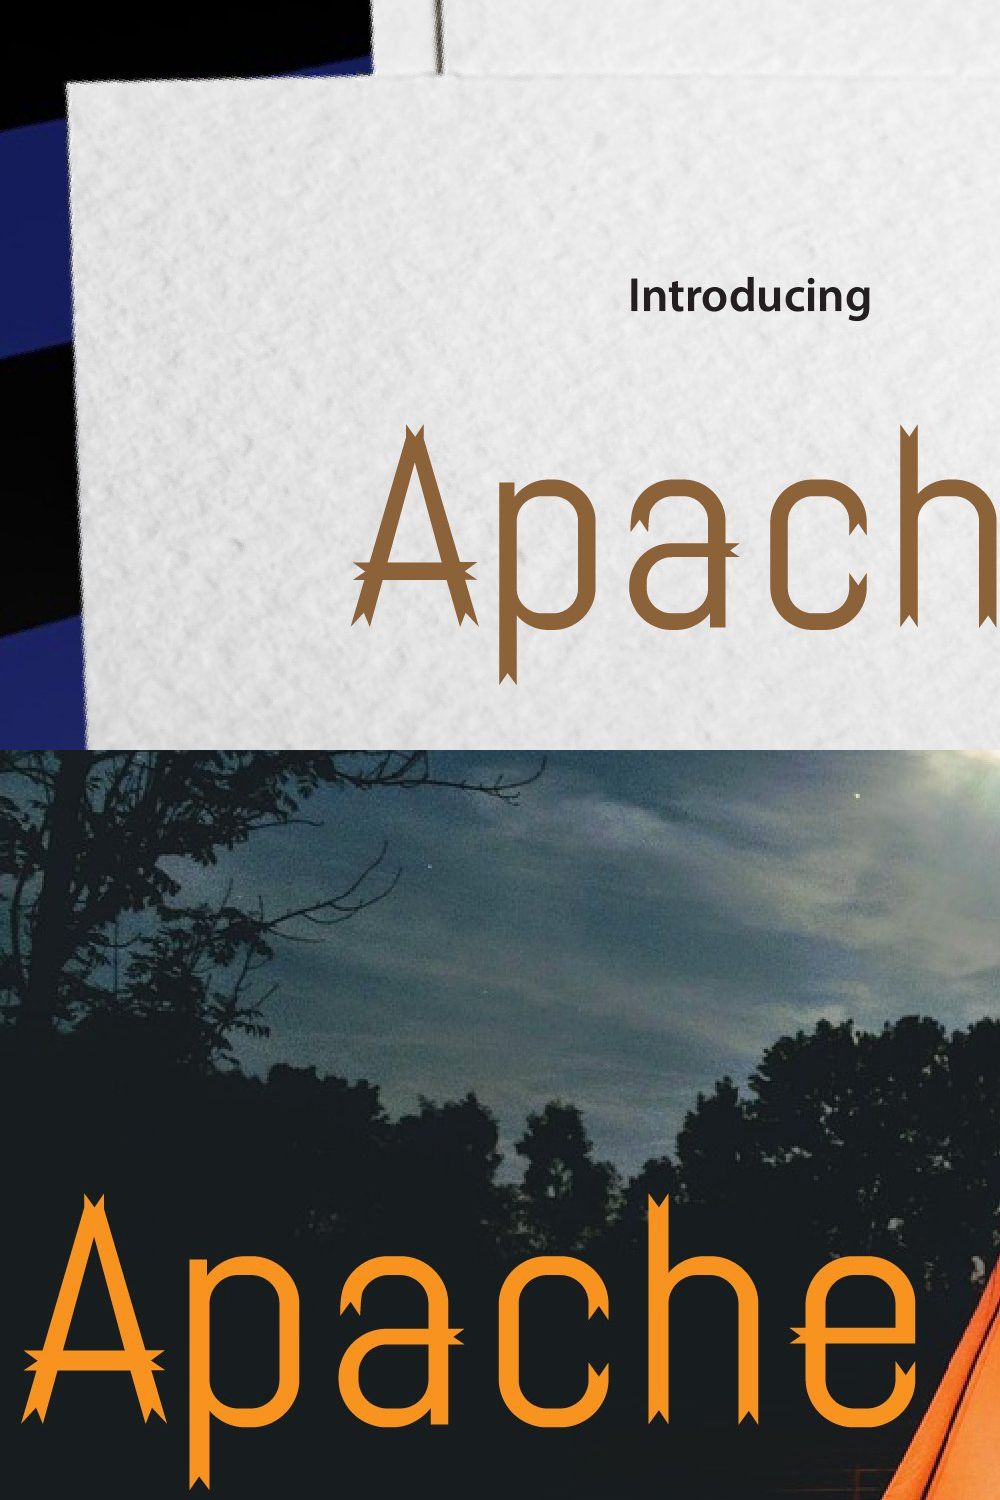 Apache pinterest preview image.